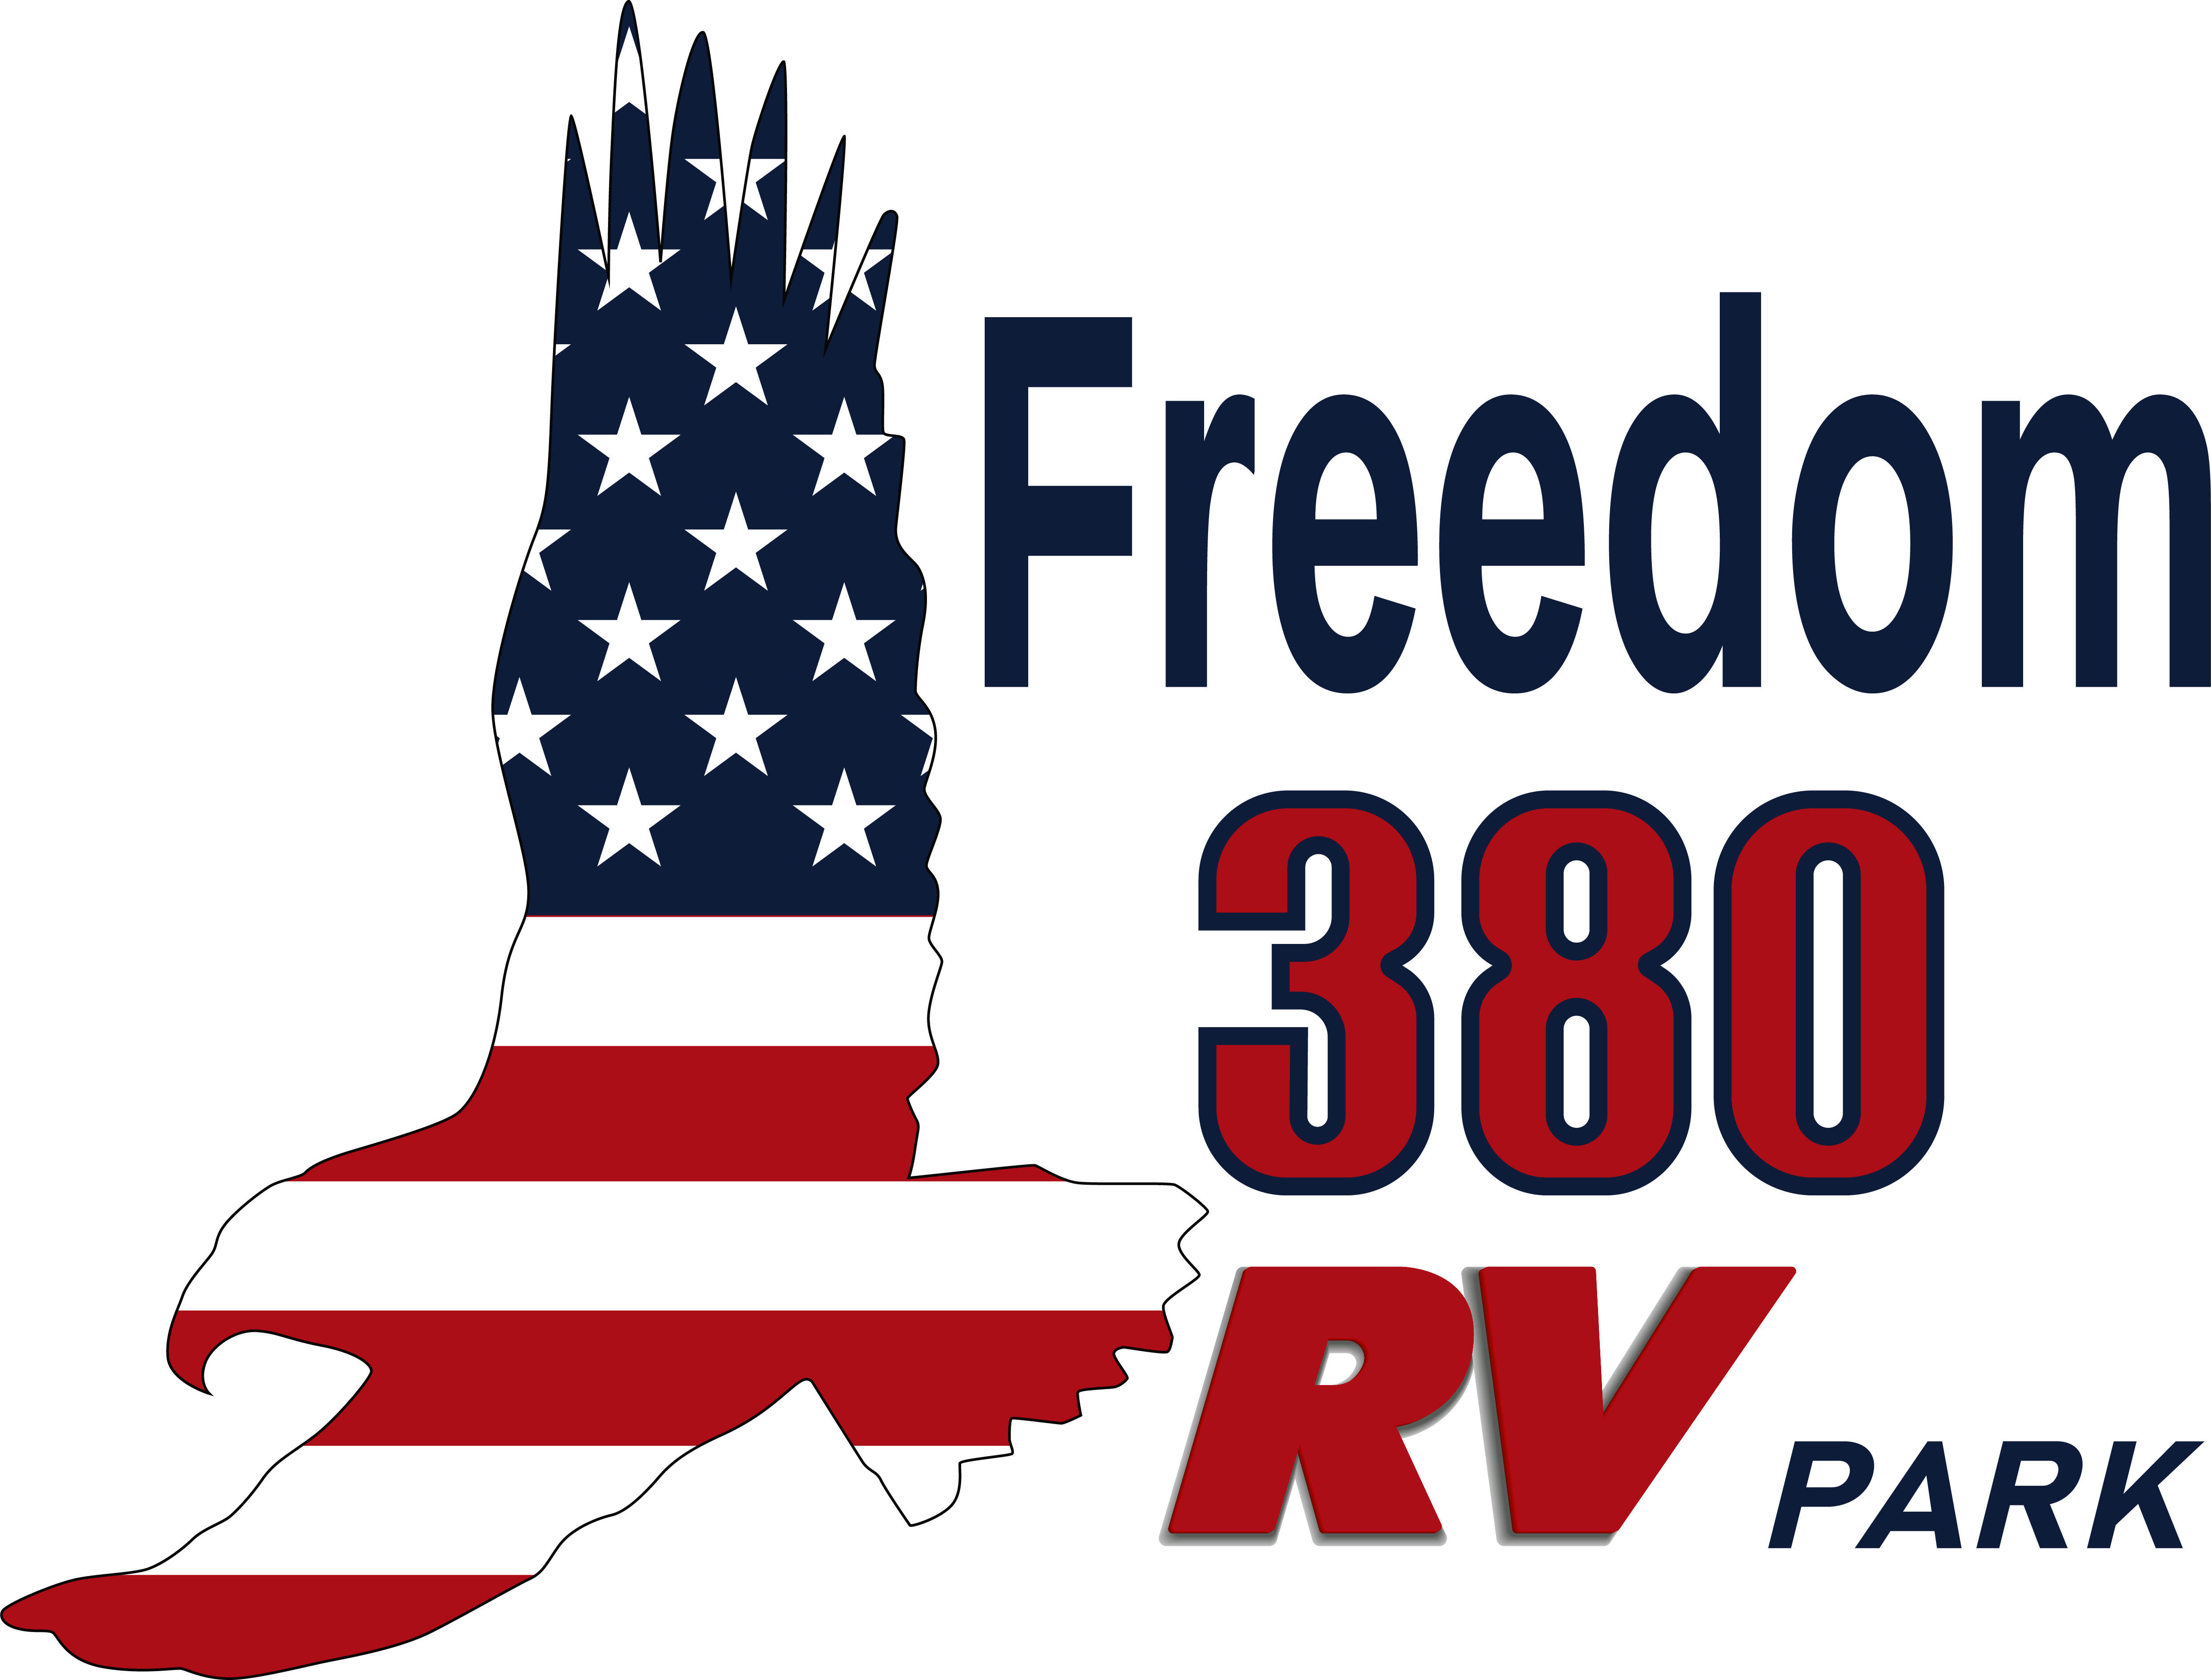 freedom 380 rv park logo